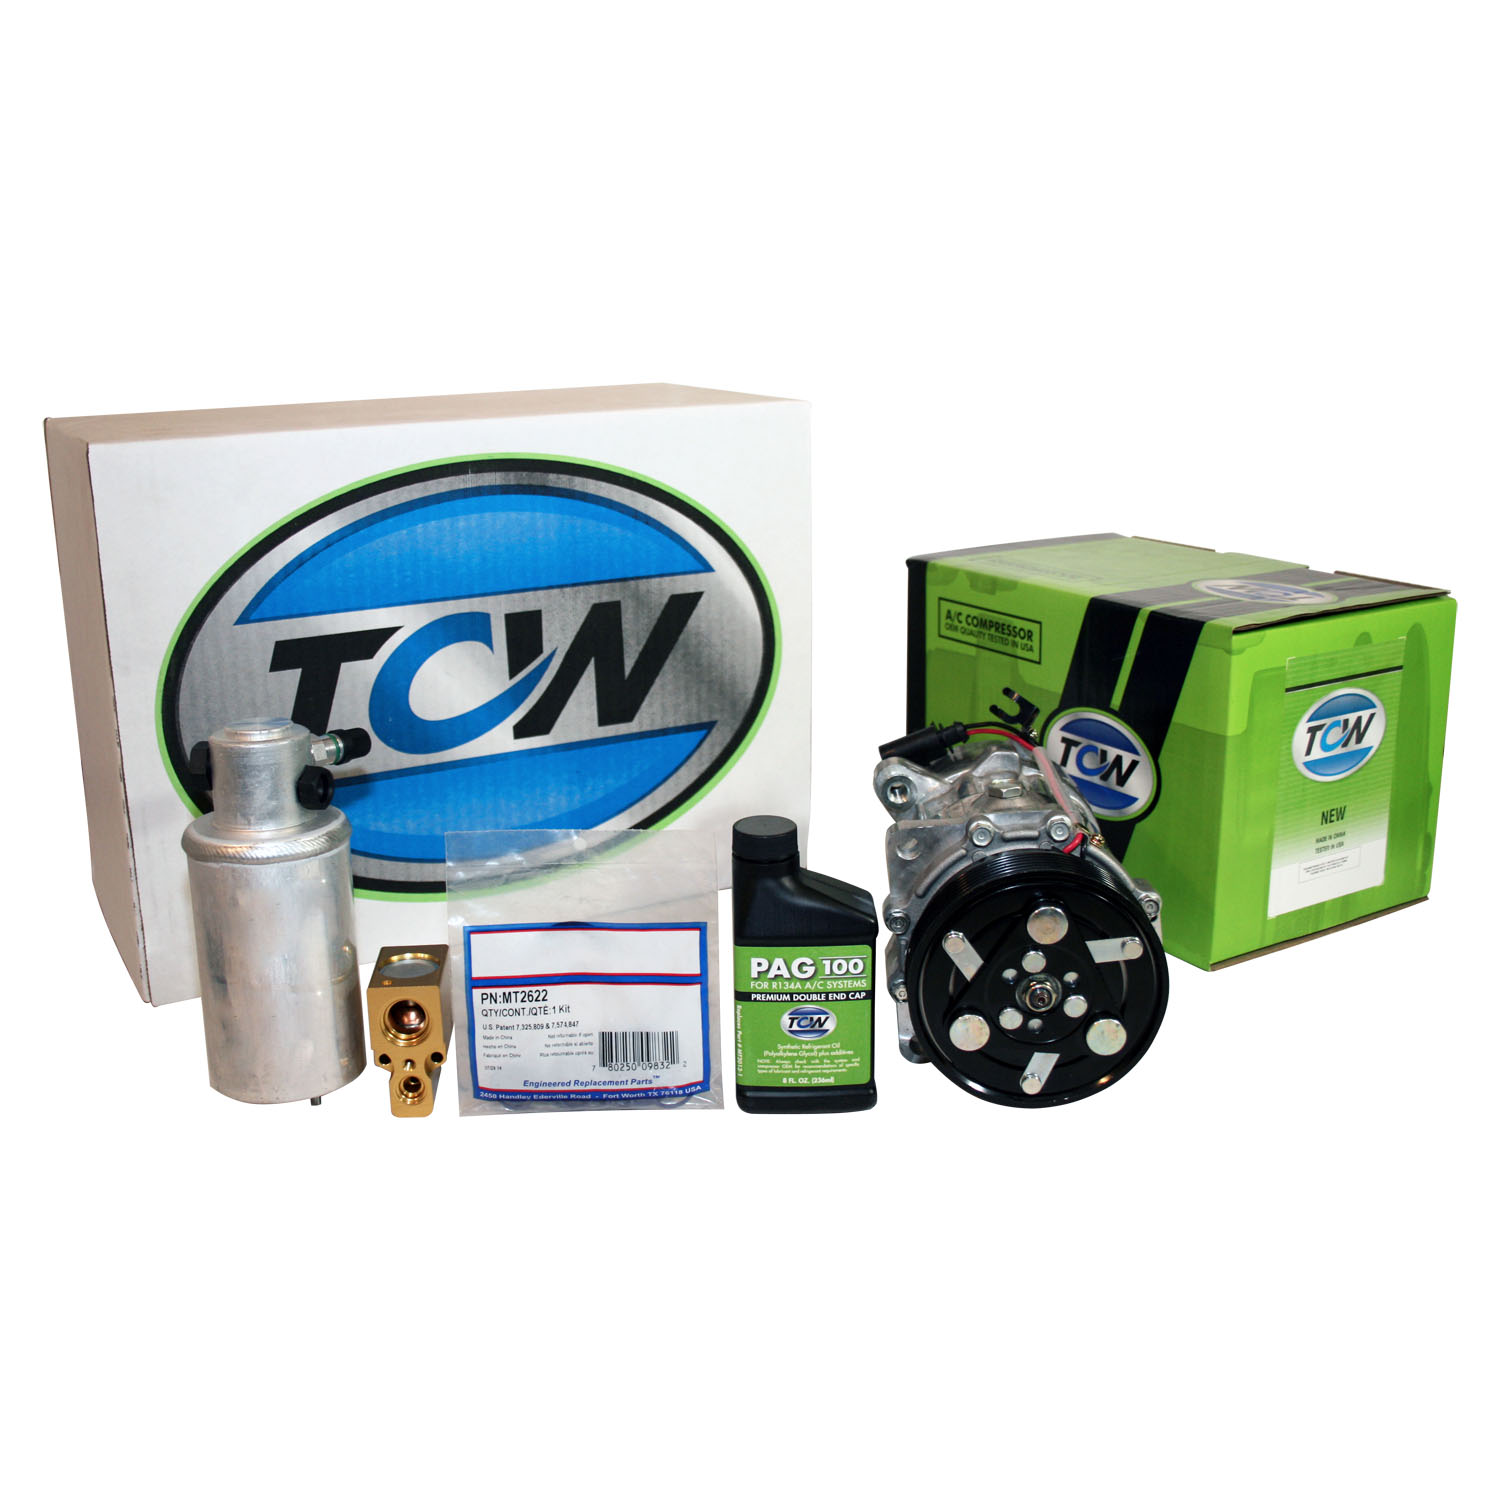 TCW Vehicle A/C Kit K1000276N New Product Image field_60b6a13a6e67c